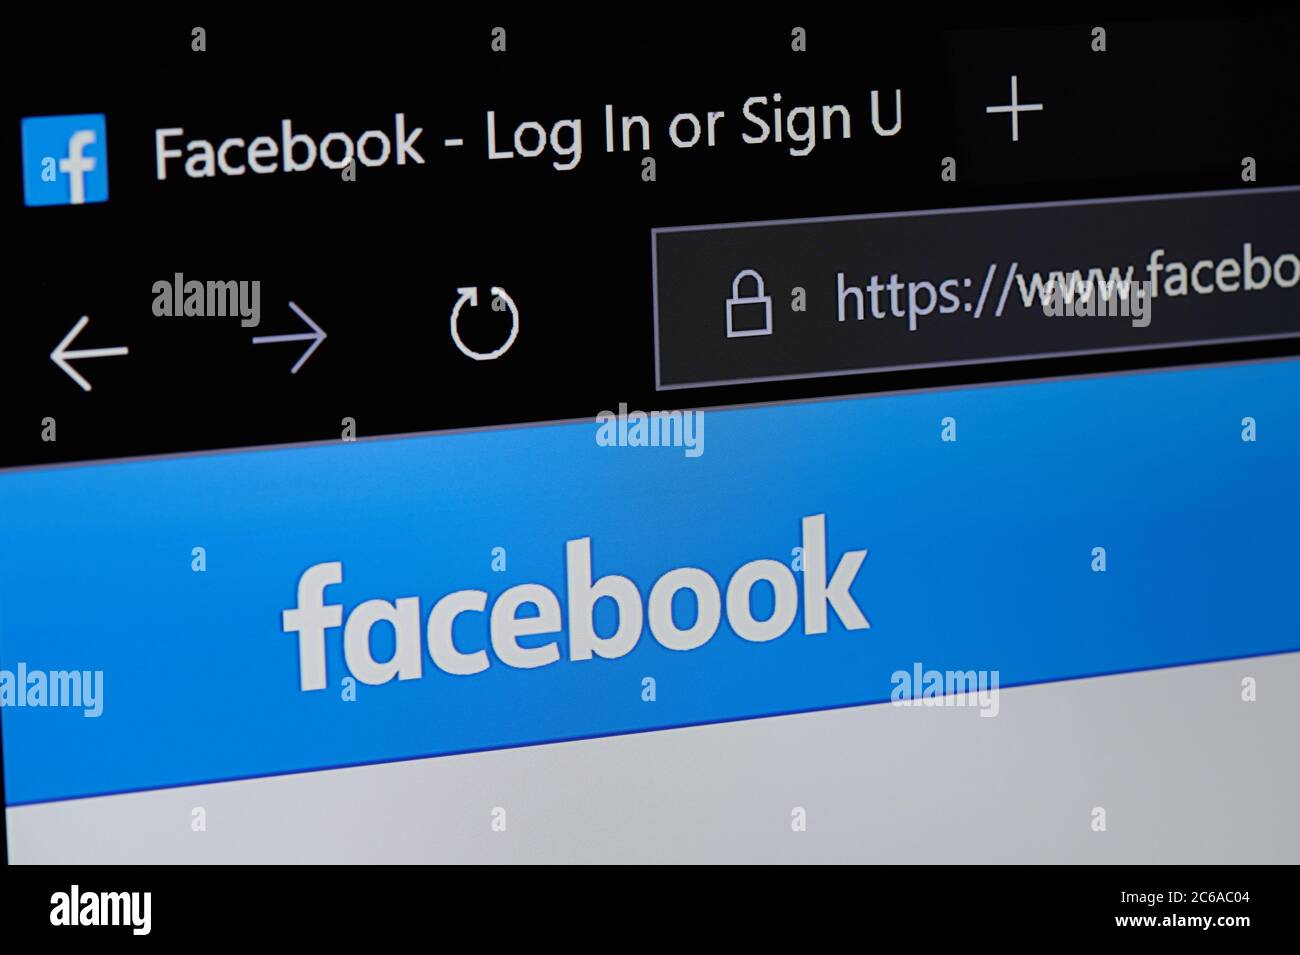 Facebook login page Stock Photo - Alamy